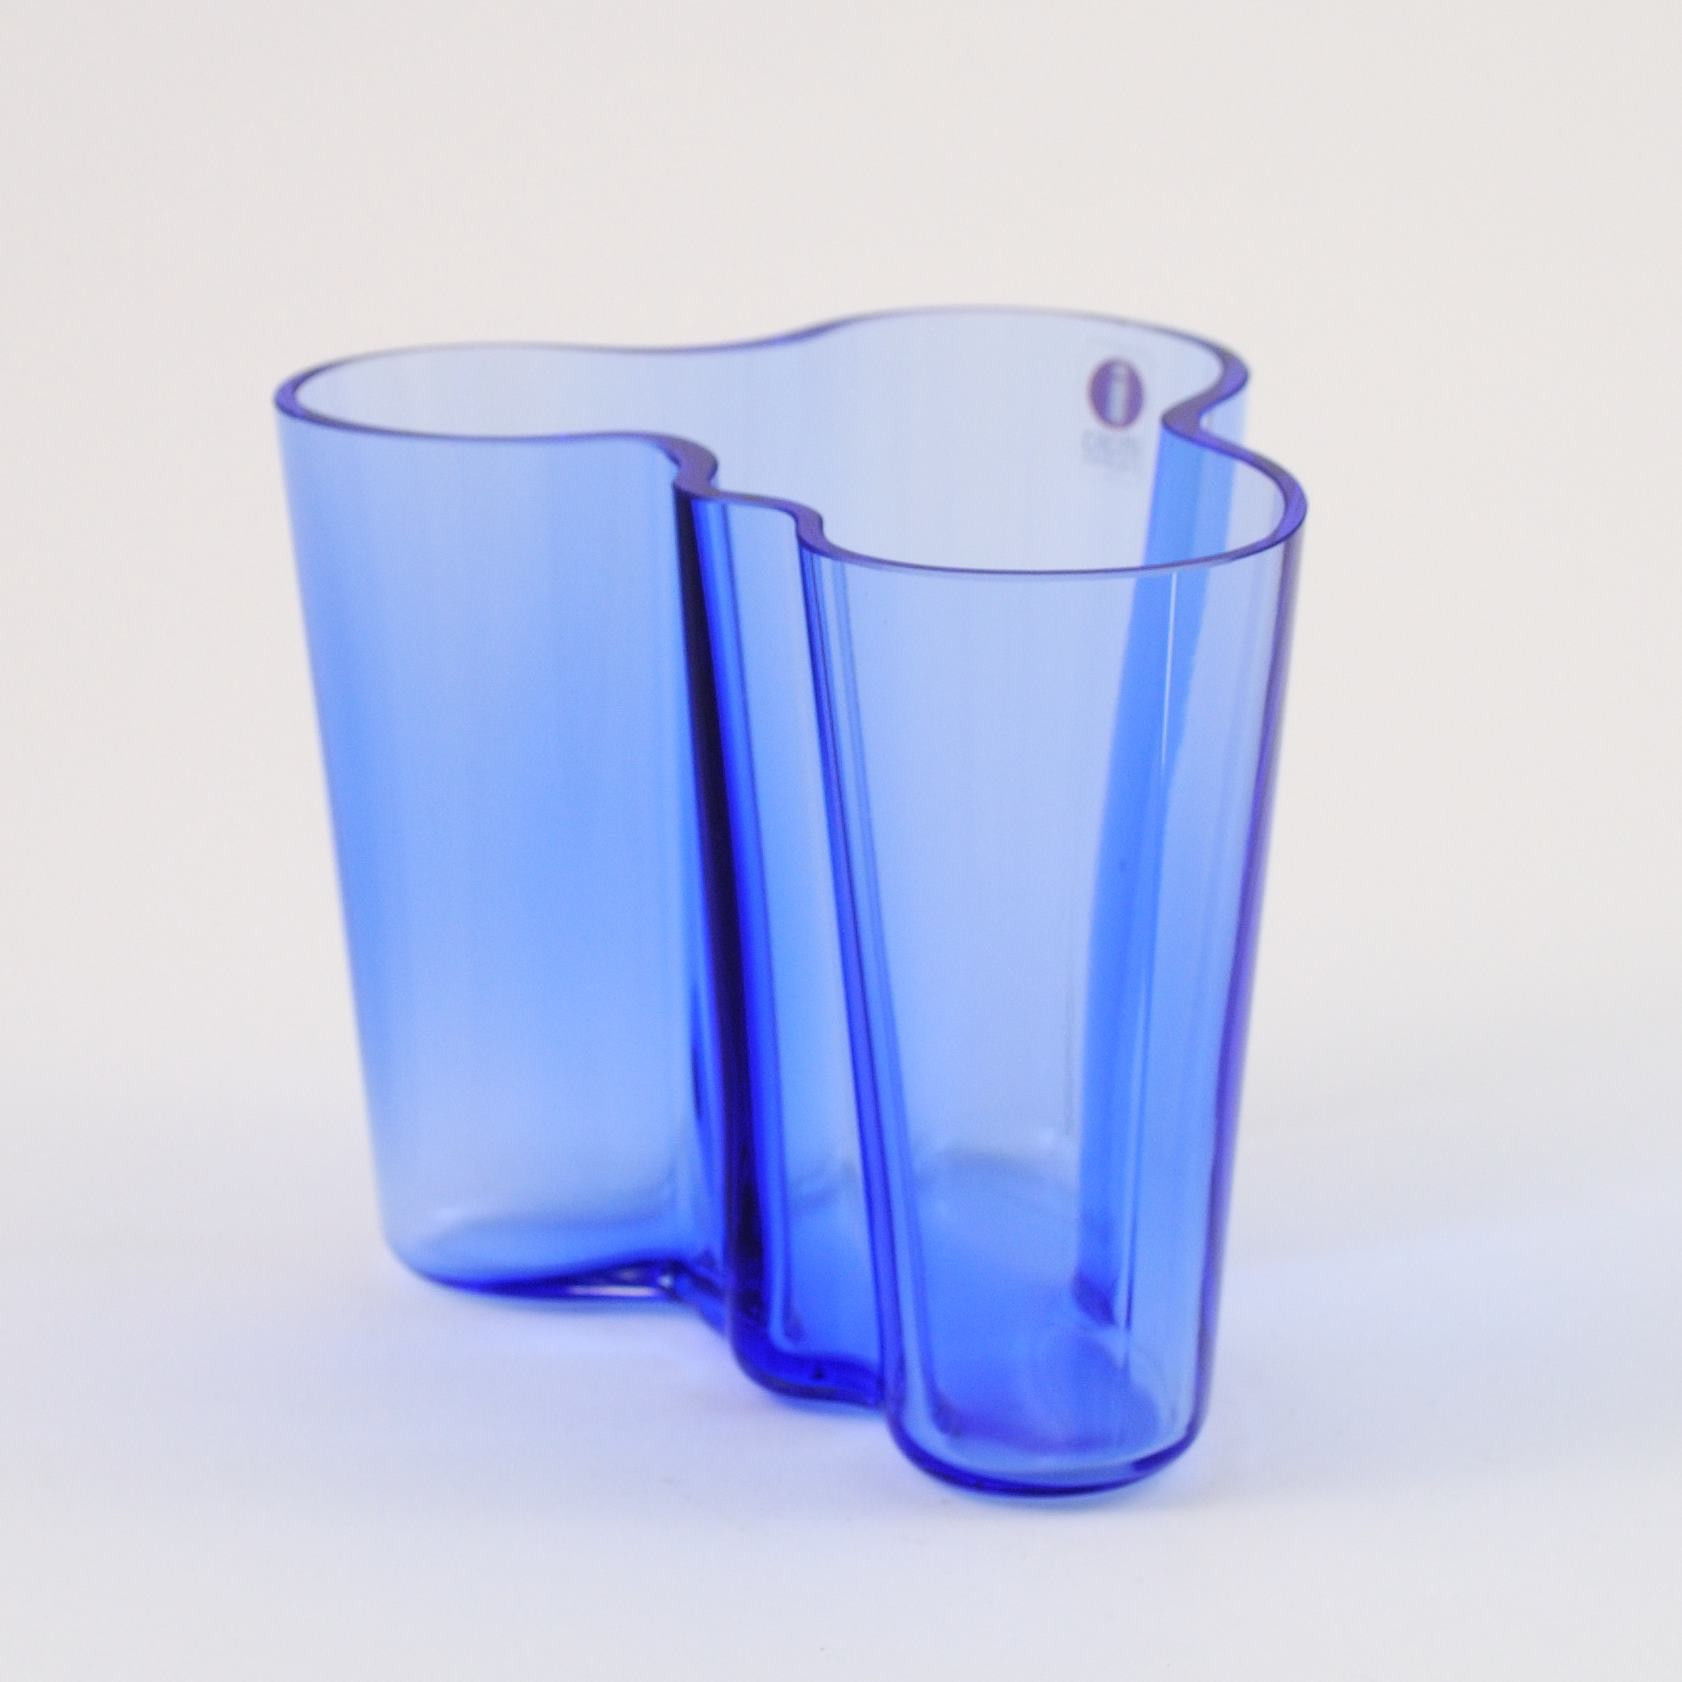 11 Spectacular Iittala Aalto Vase 2023 free download iittala aalto vase of szklany wazon iittala savoy alvar aalto tresor antyki i vintage intended for szklany wazon iittala aalto w kolorze niebieskim